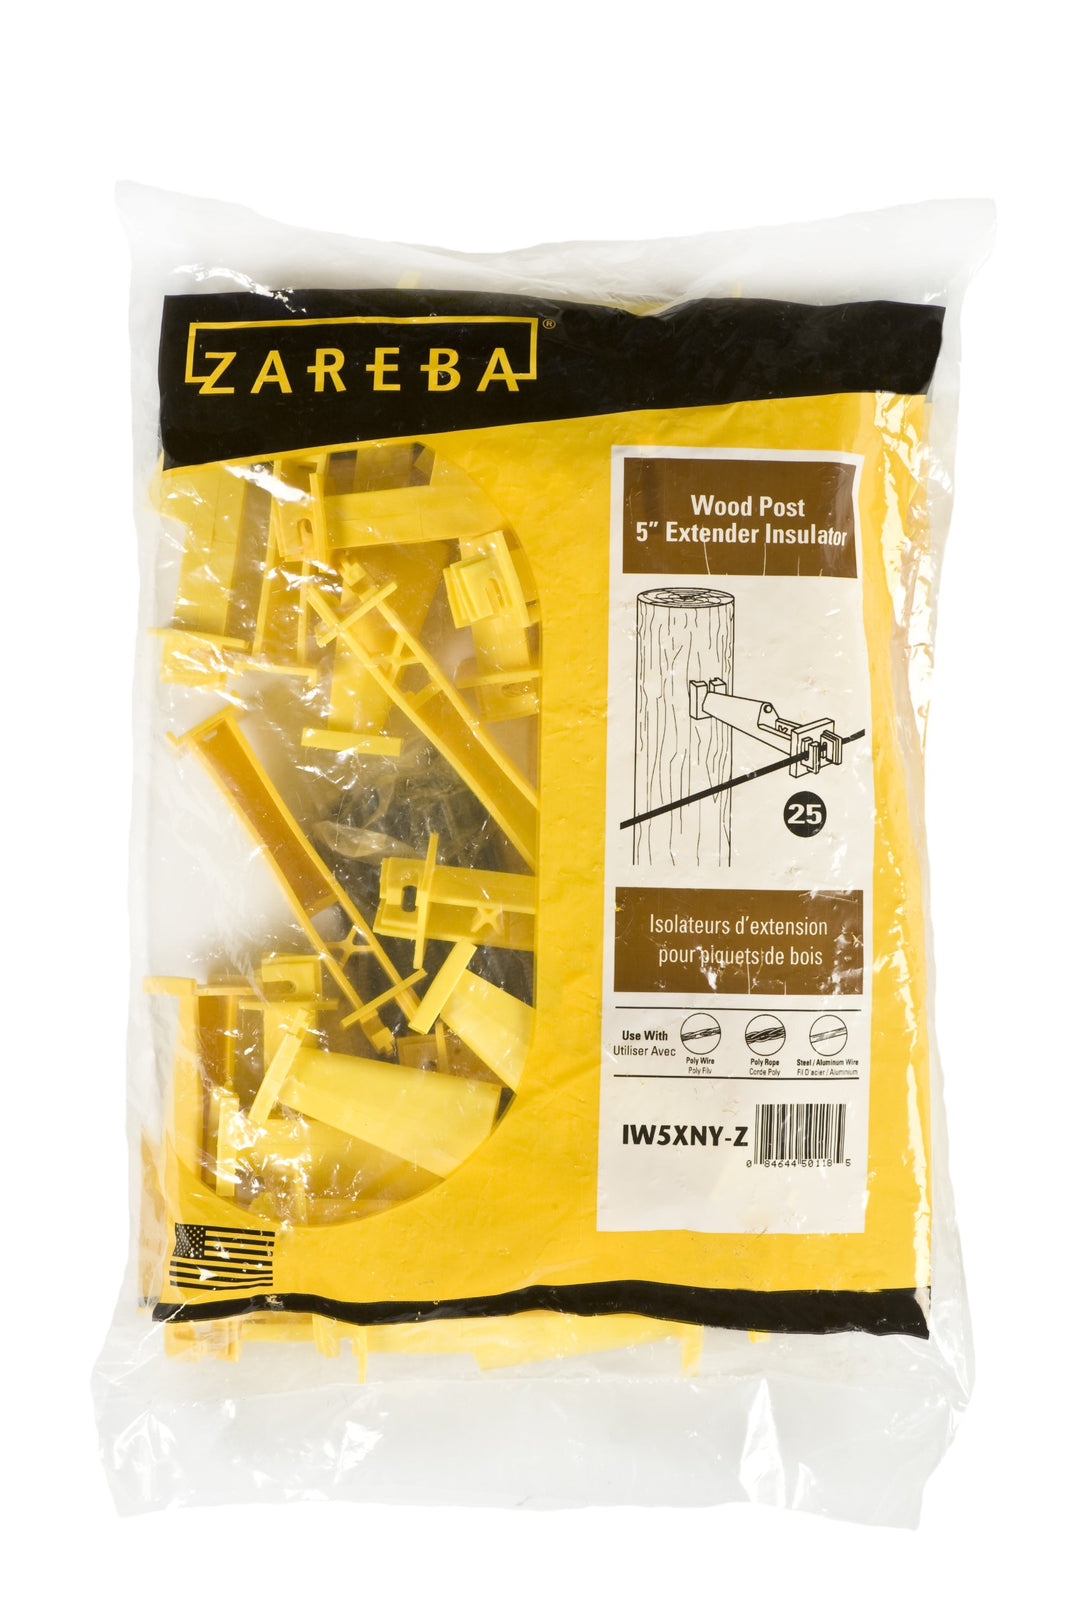 Zareba IW5XNY-Z Nail-on 5-Inch Extender Insulator, 25 per Bag